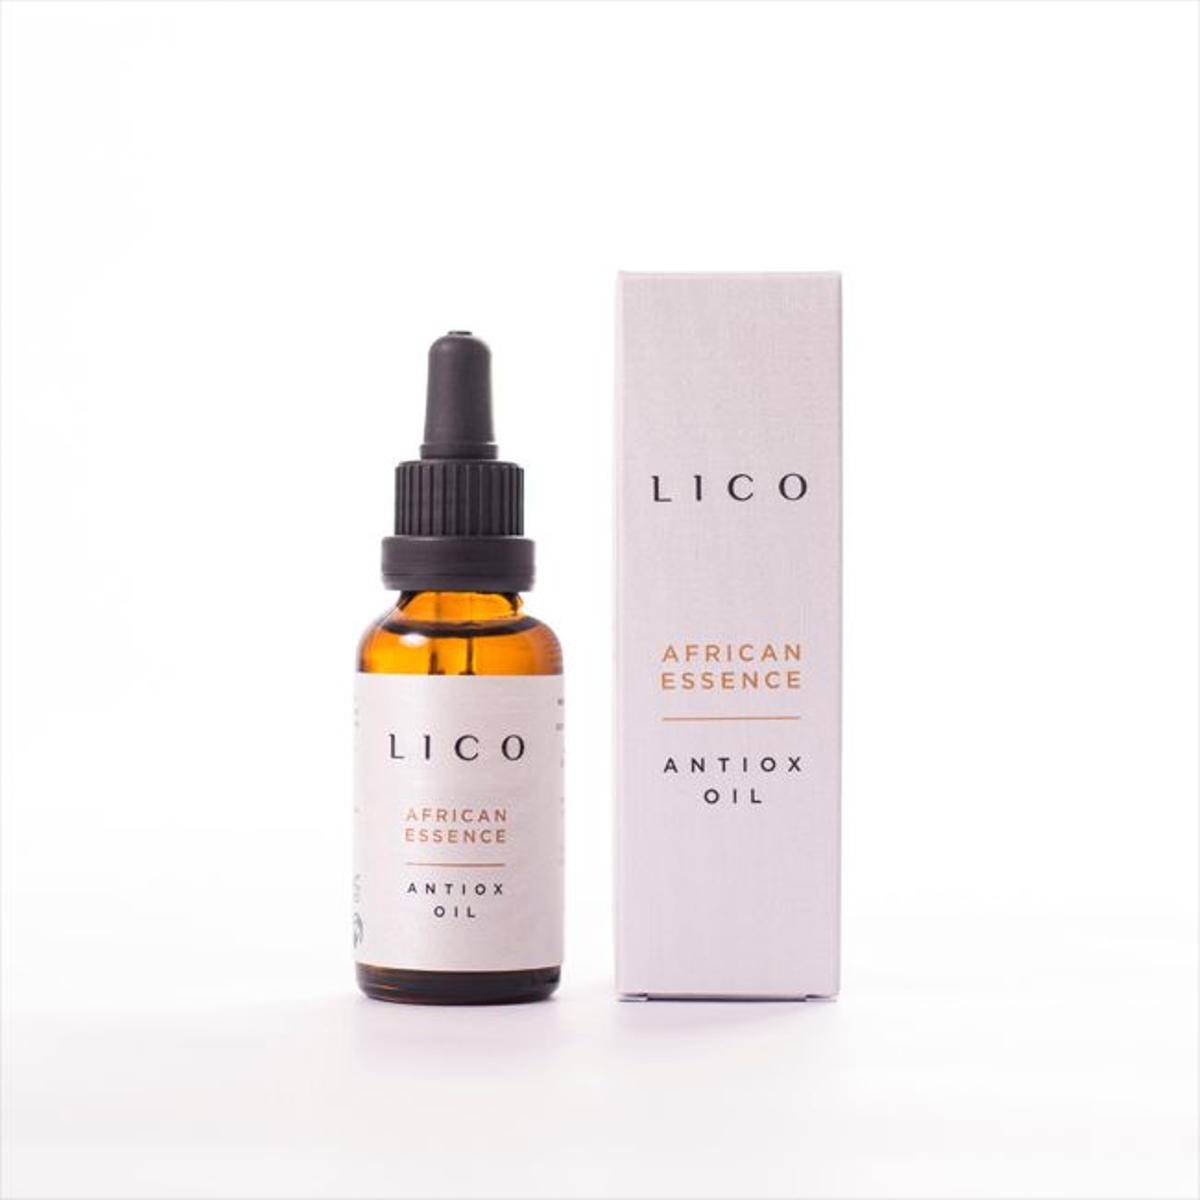 African essence Antiox oil de LICO Cosmetics